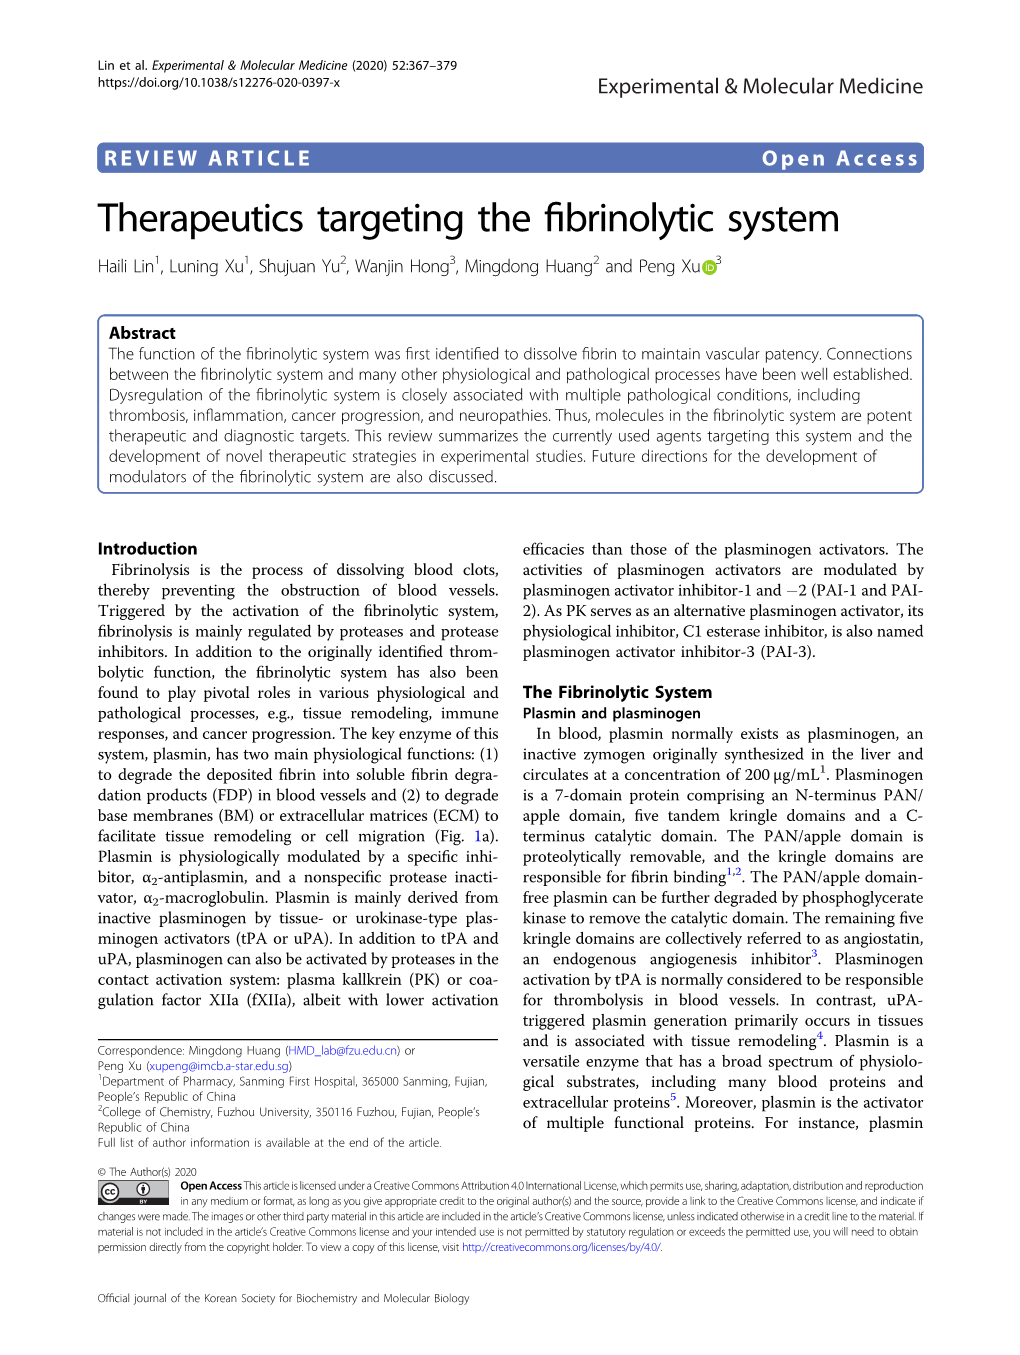 Therapeutics Targeting the Fibrinolytic System